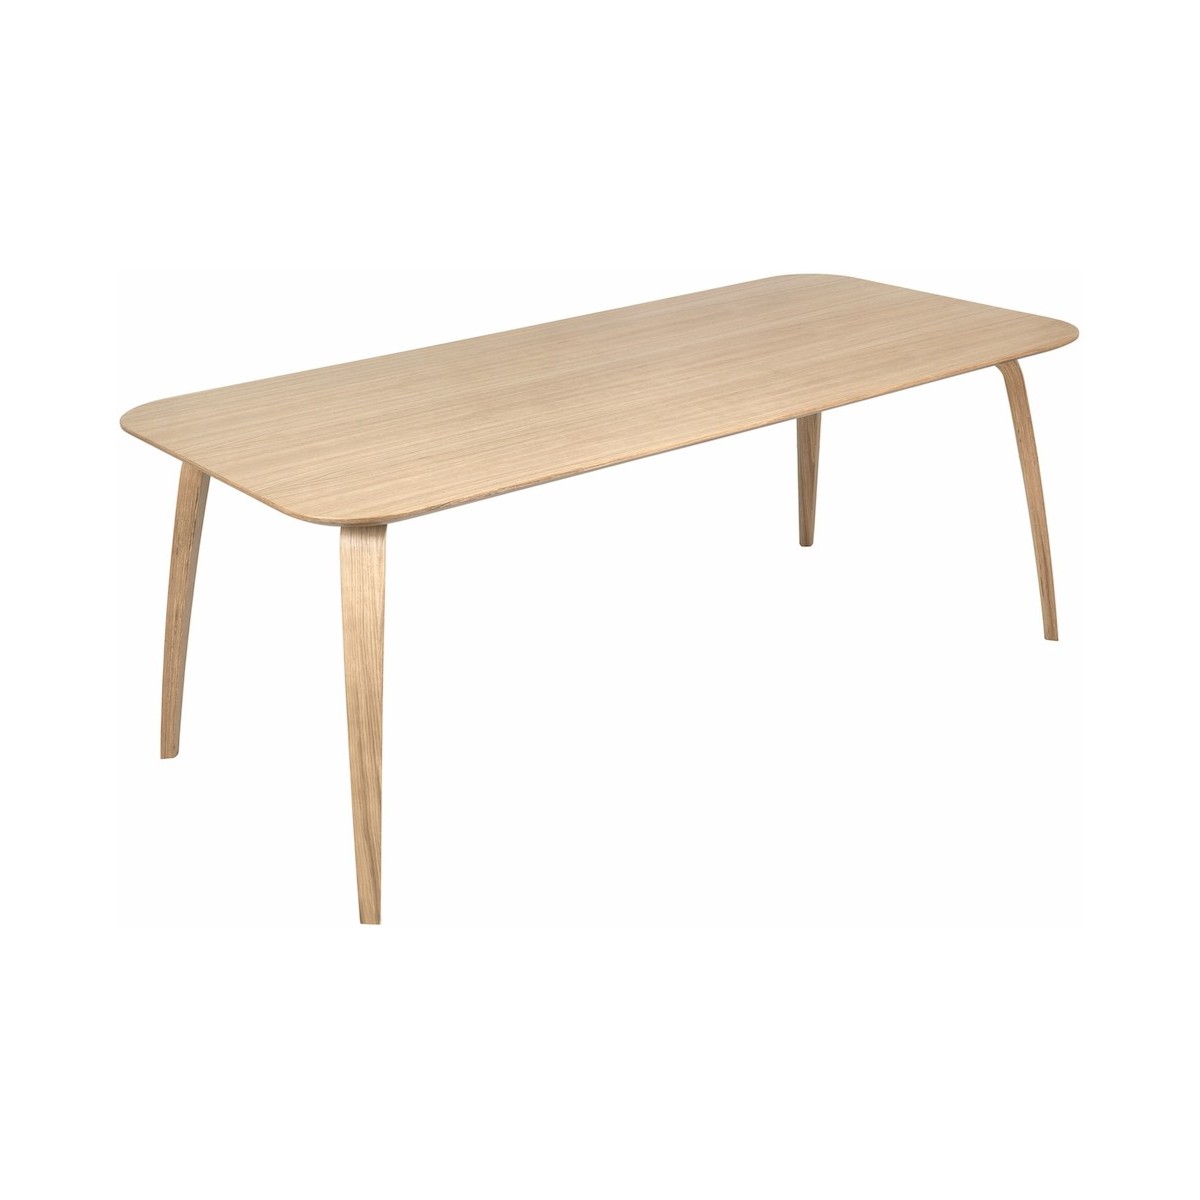 90x180cm - oak - rectangular Gubi dining table